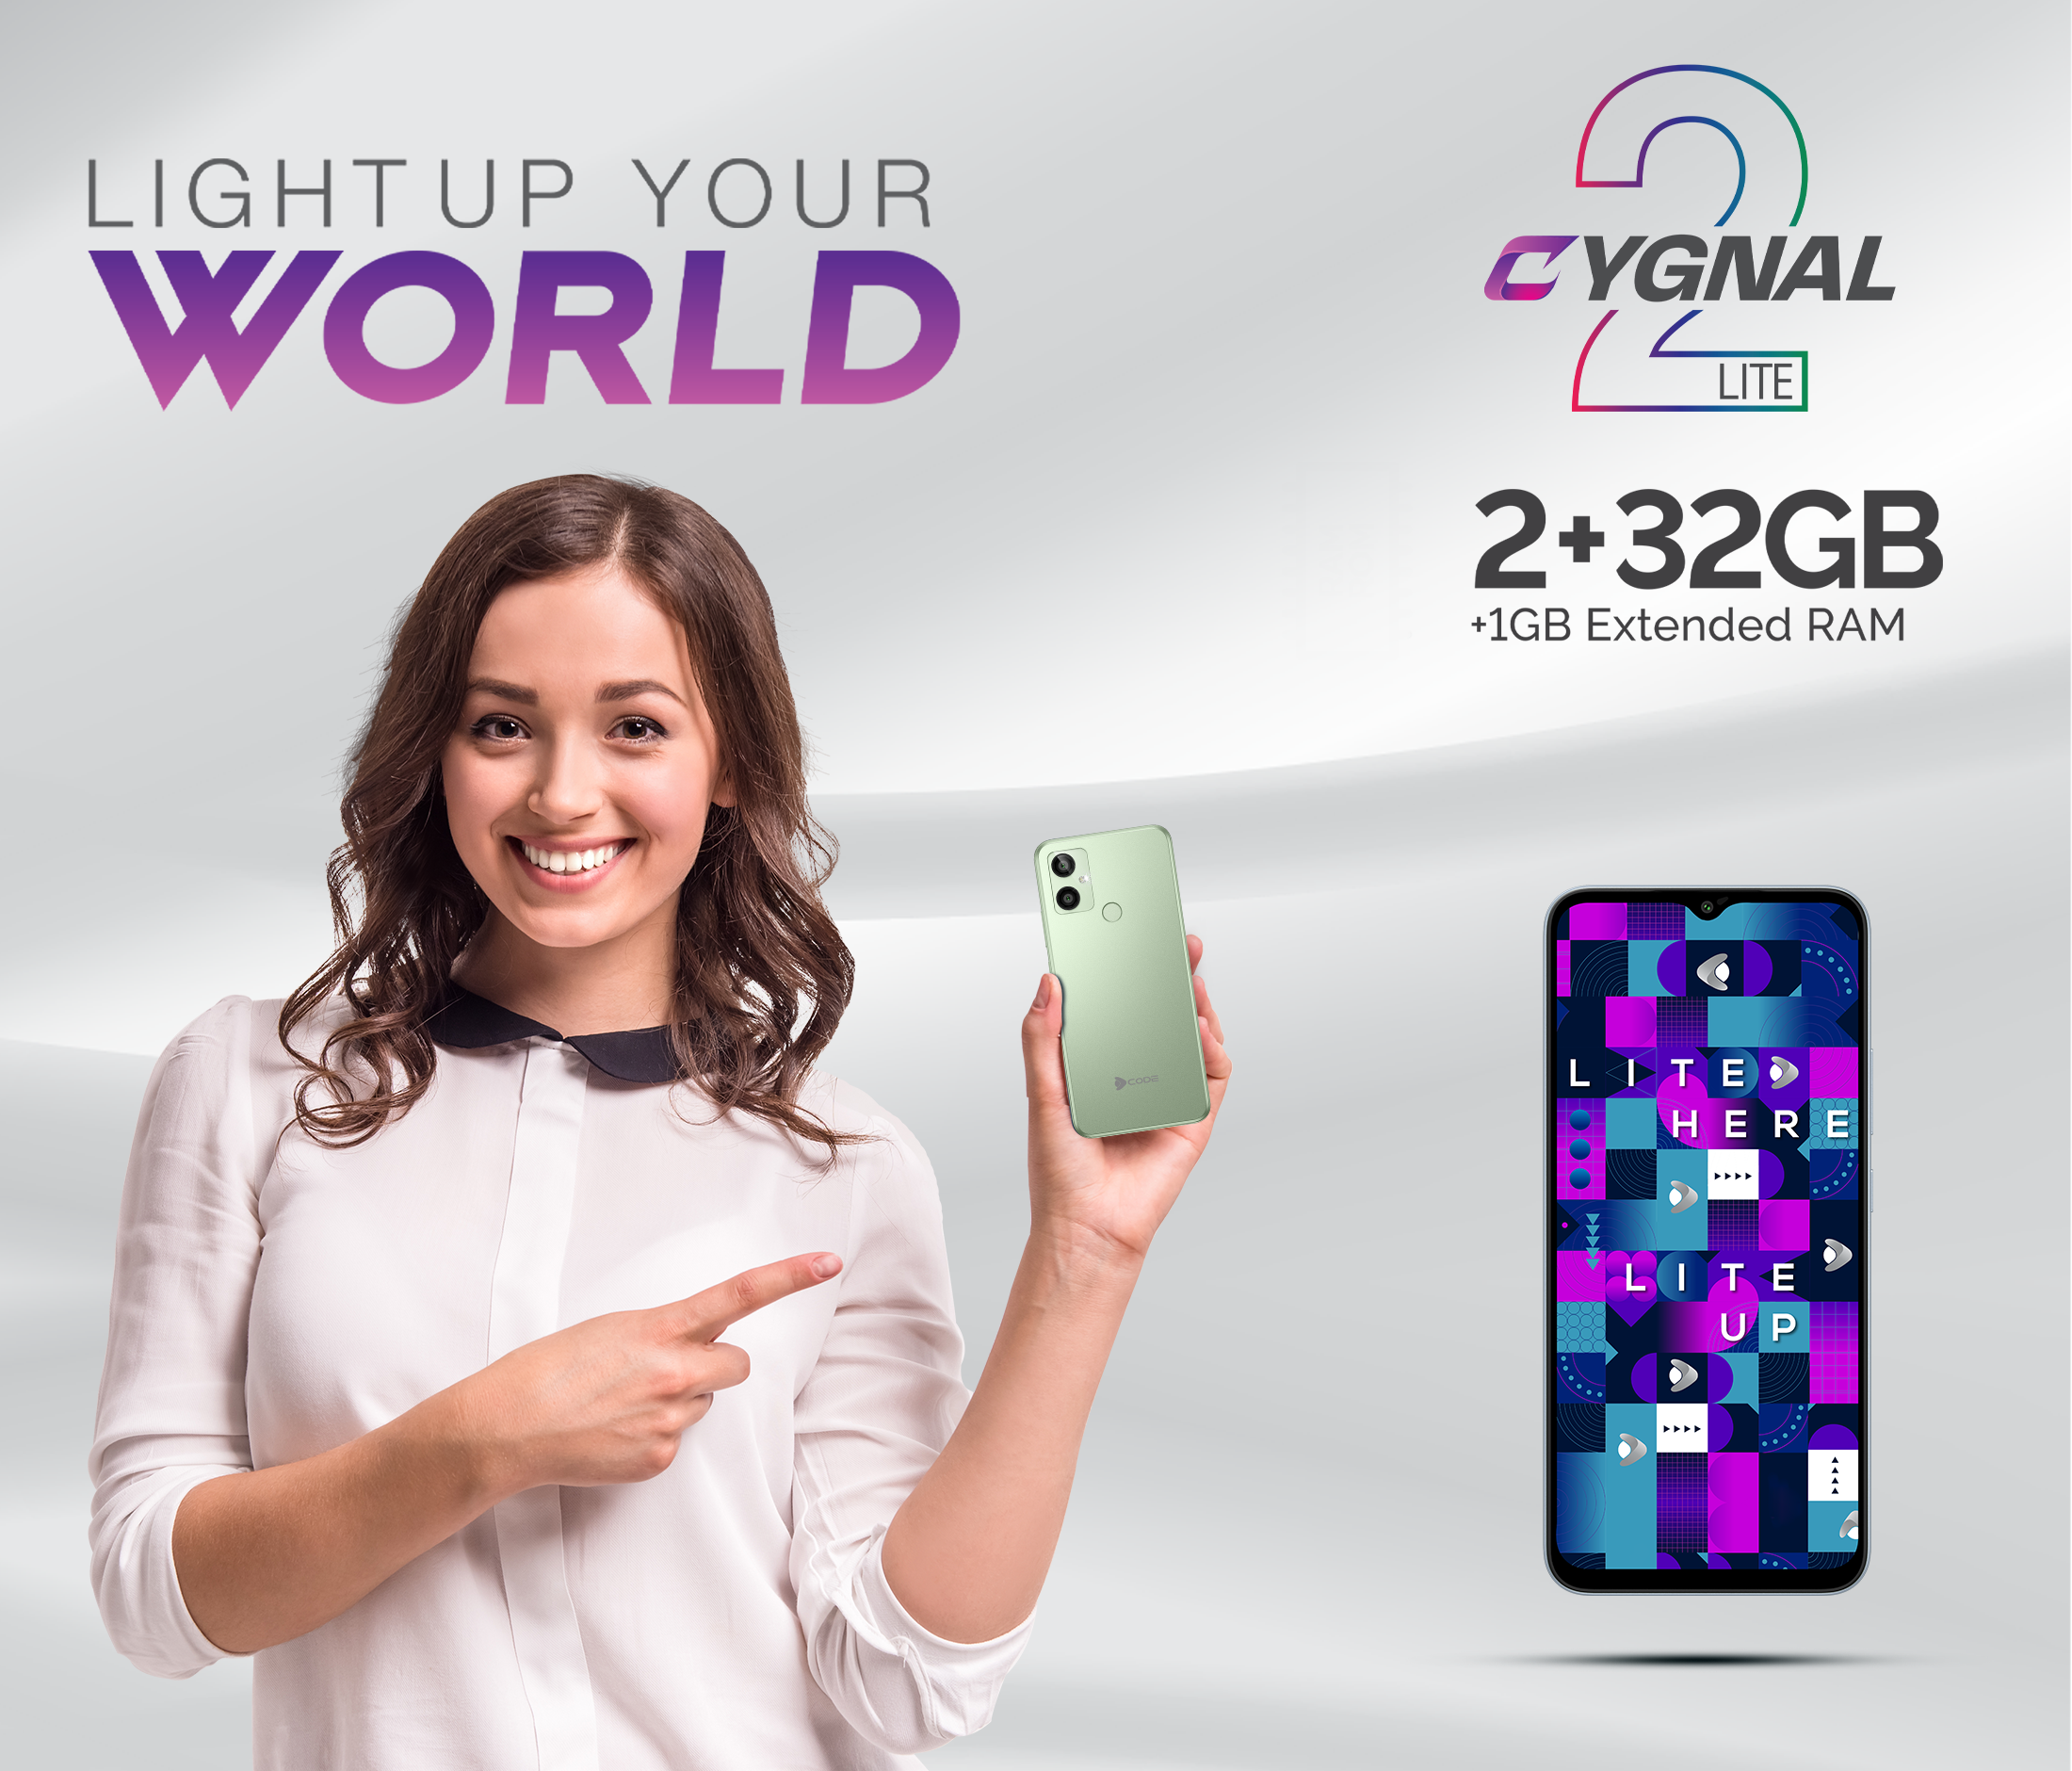 cygnal-2-pro mobile image